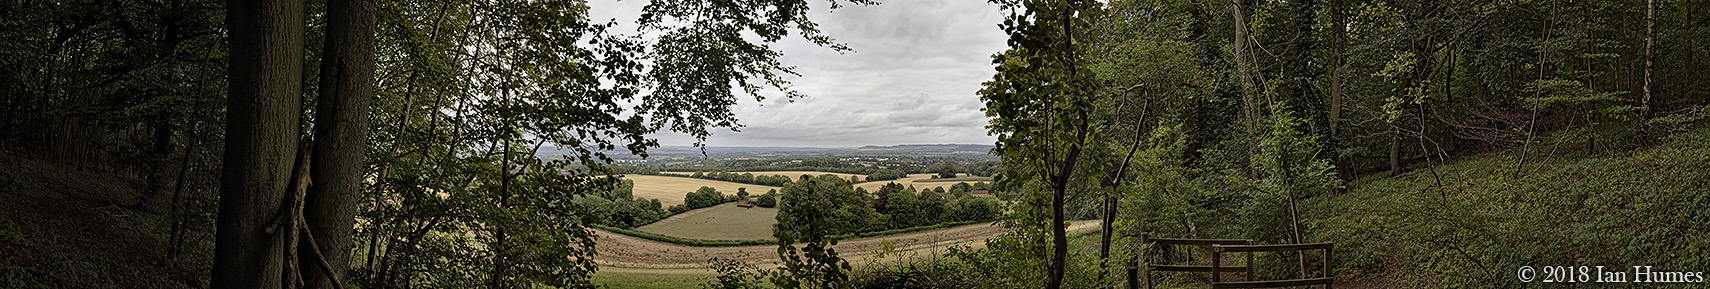 Hastoe Hill - Hertfordshire